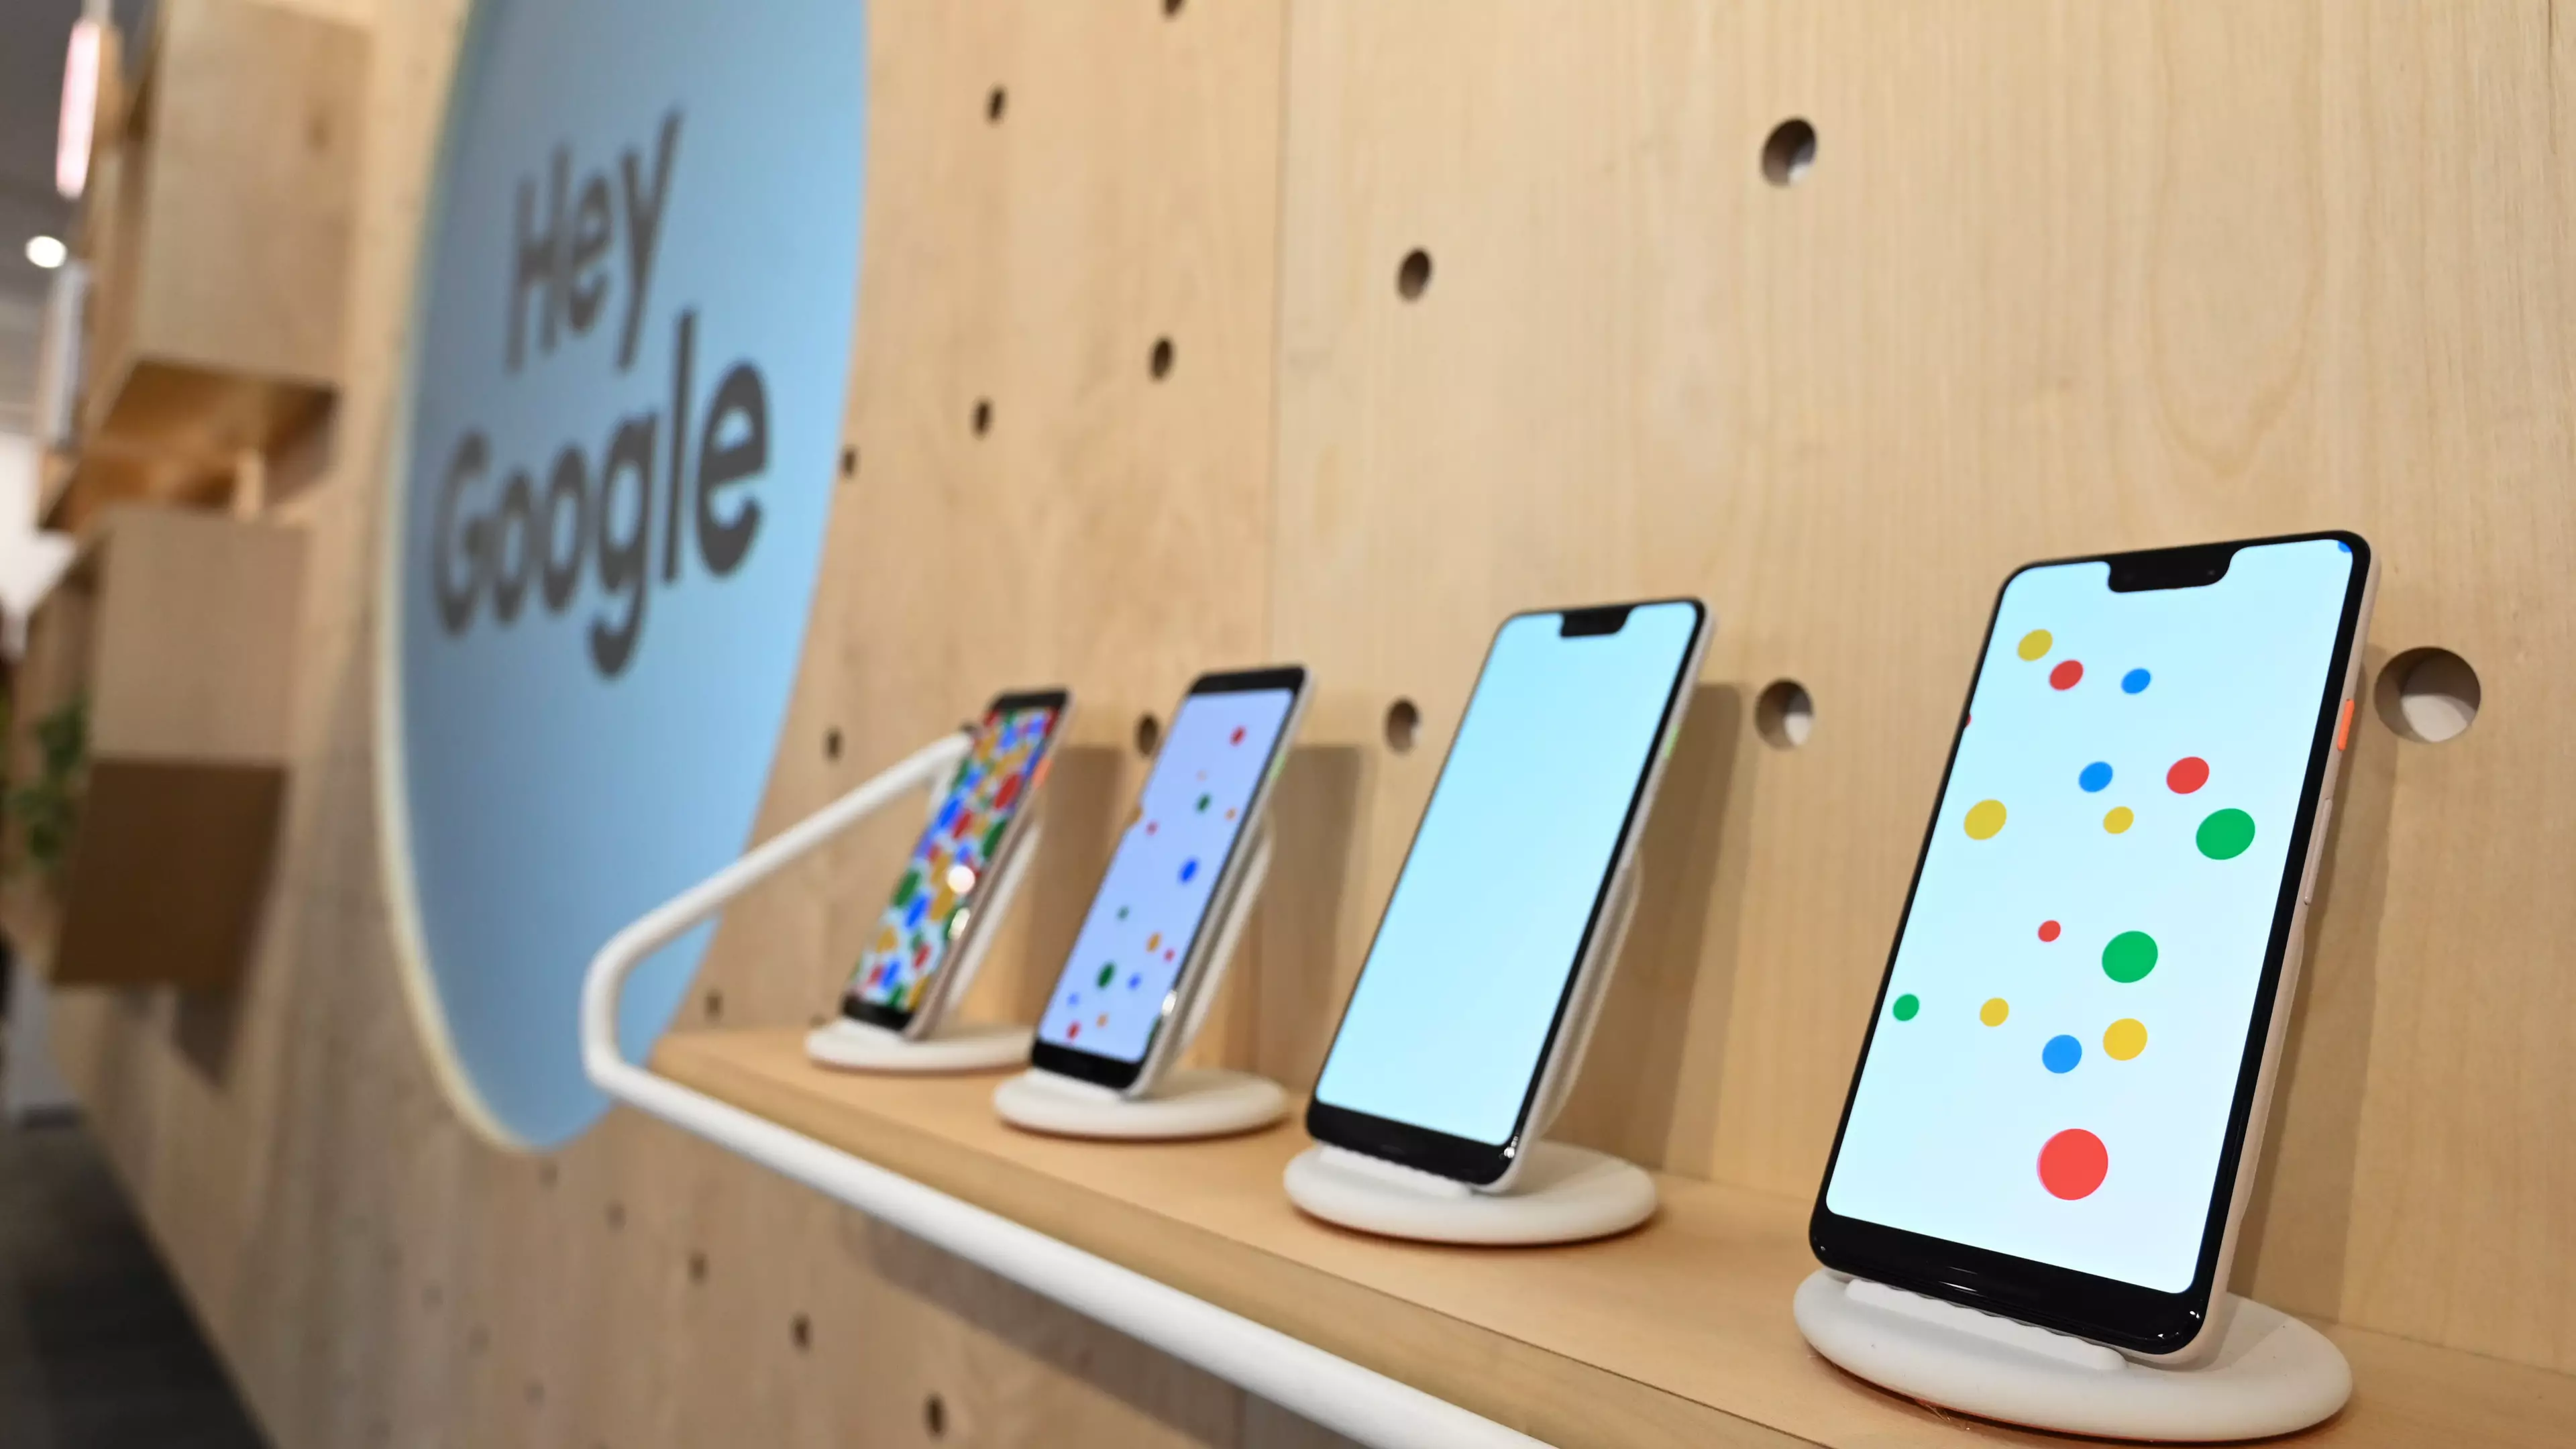 Man Asks Google For A Refund, Gets Sent 10 New Pixel 3 Phones